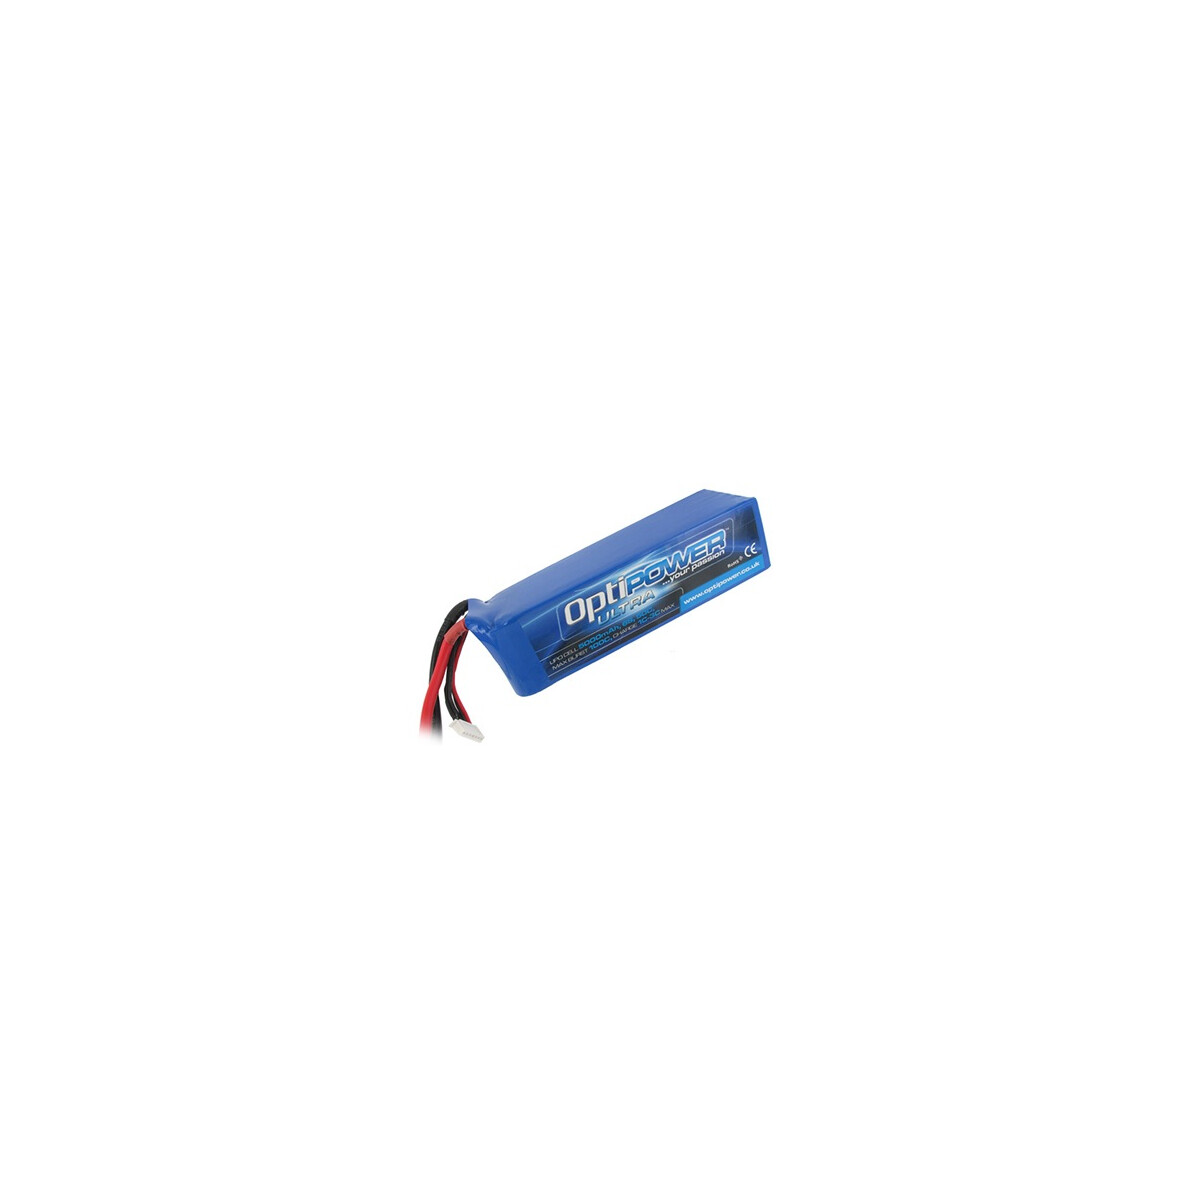 OptiPower Ultra 50C Lipo Cell Battery 5000mAh 6S 50C